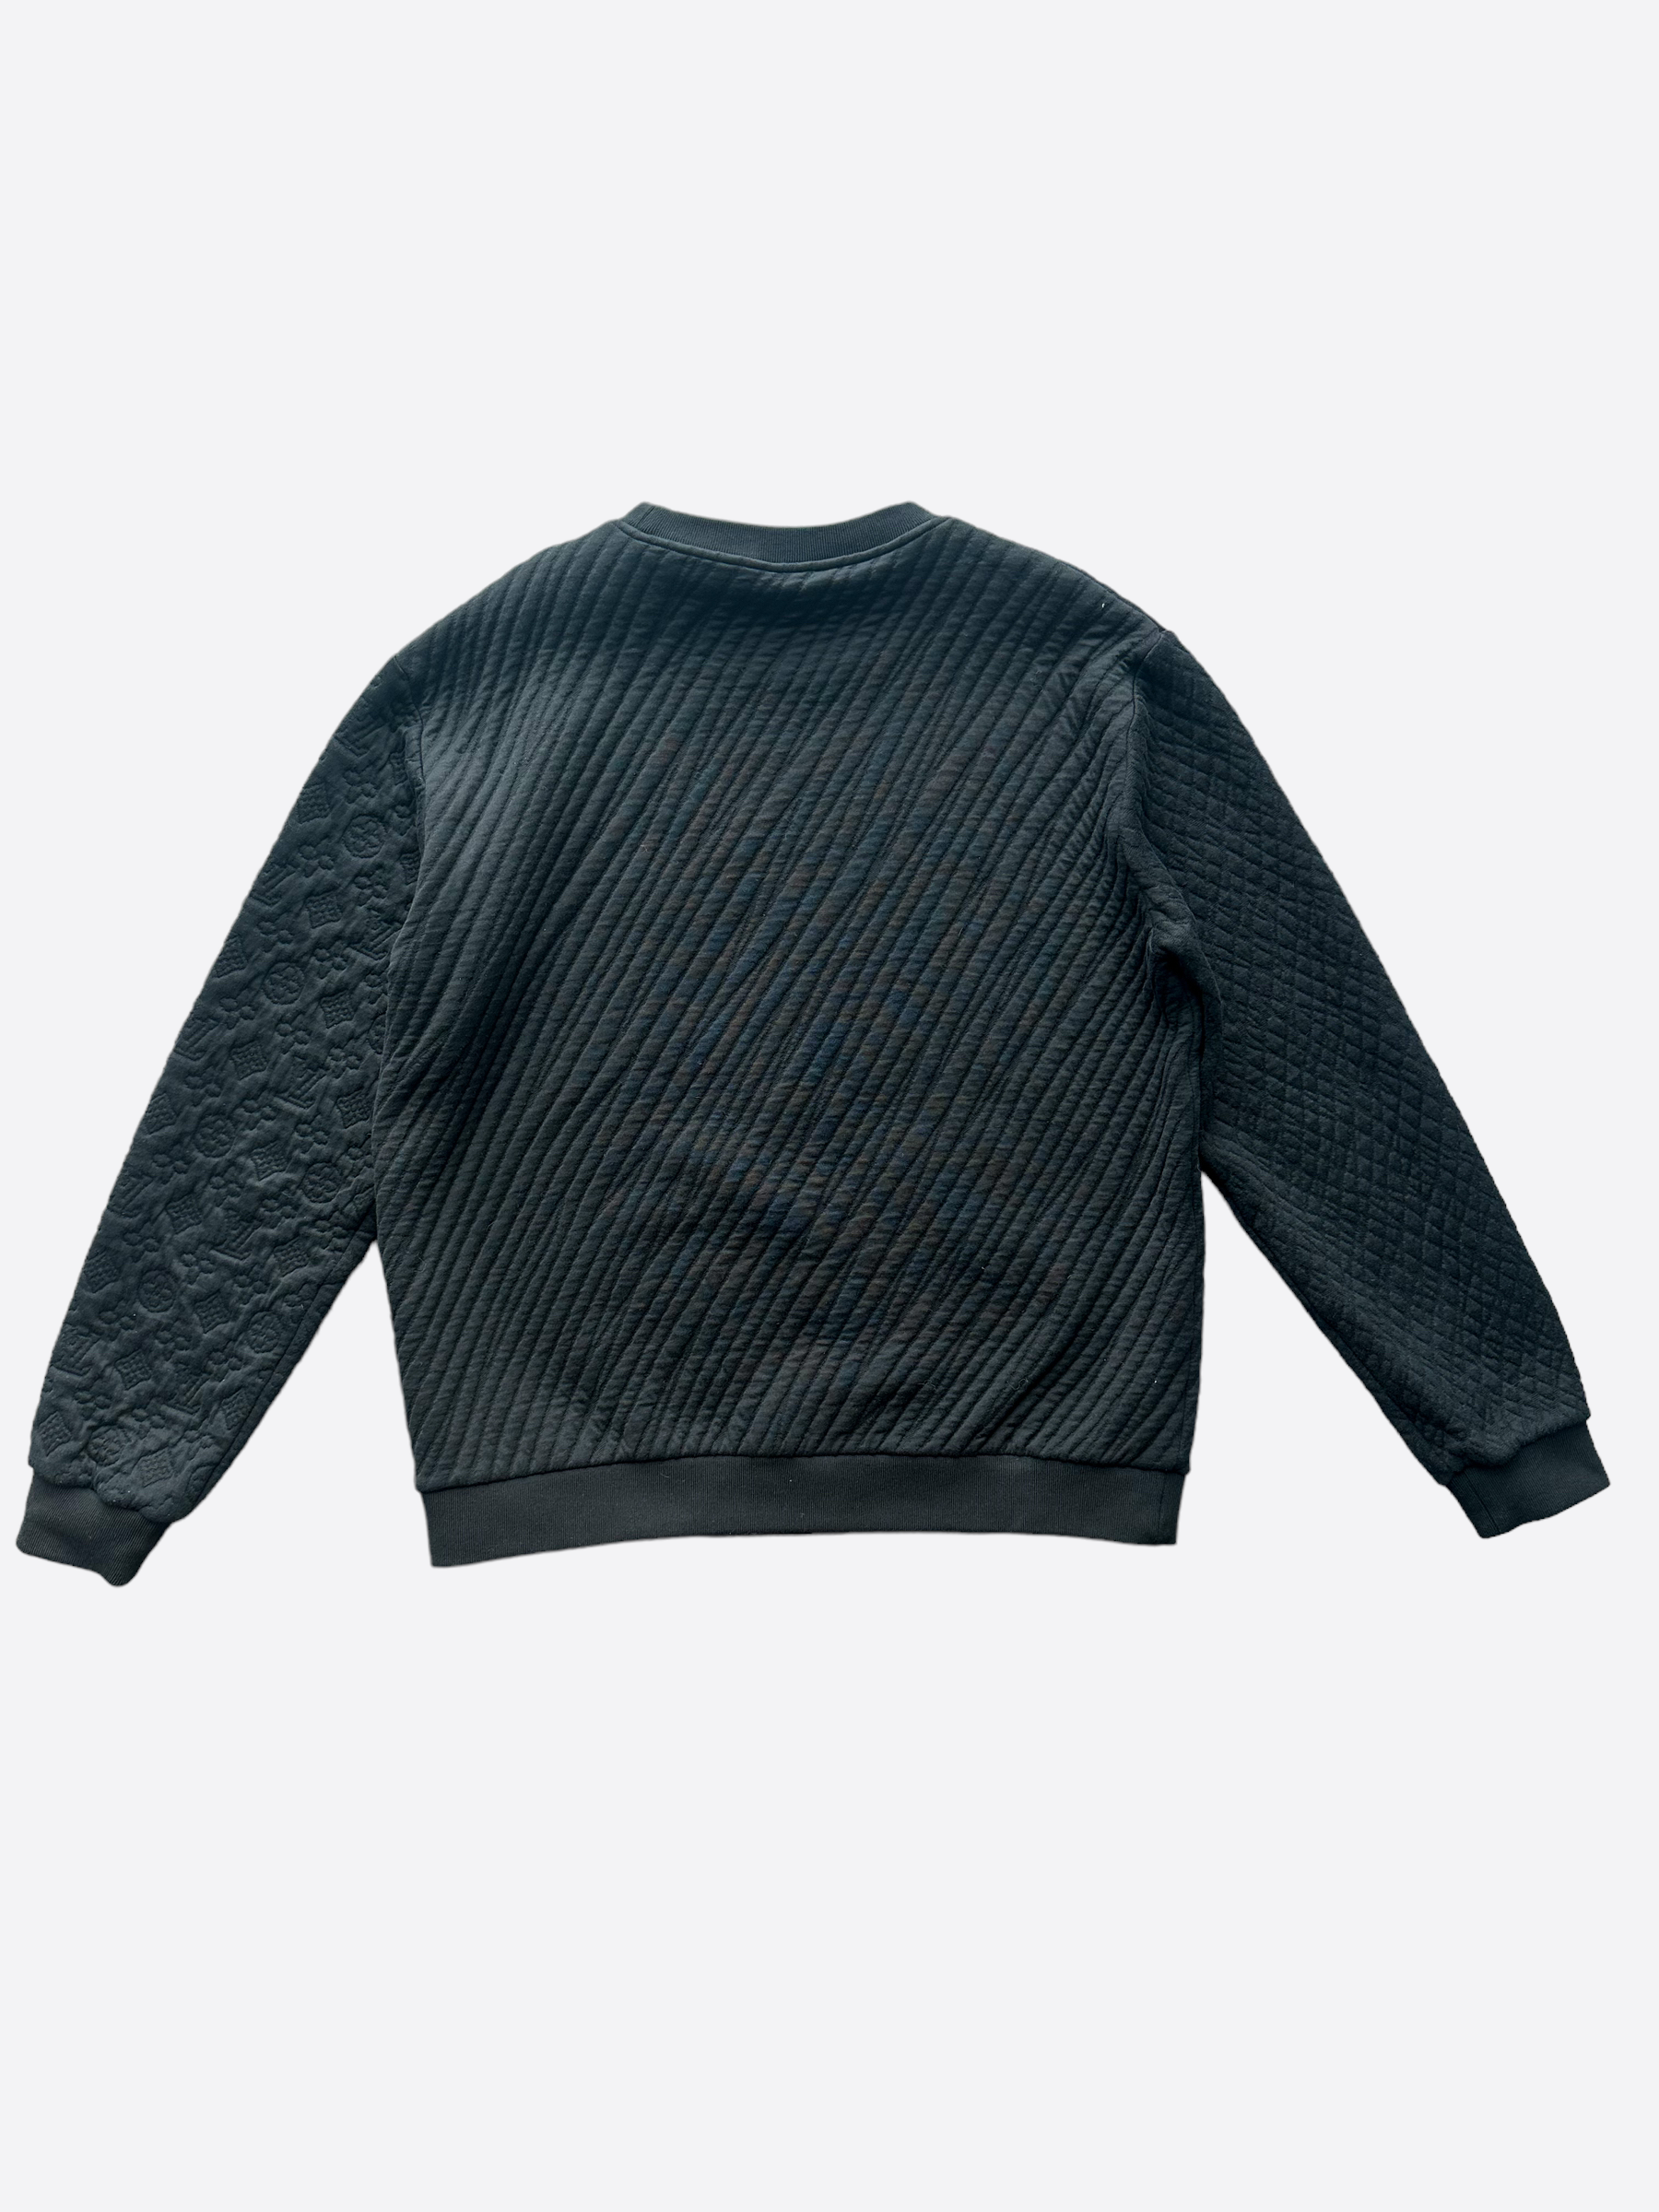 WornOnTV: Shannon's black Louis Vuitton logo sweater on The Real